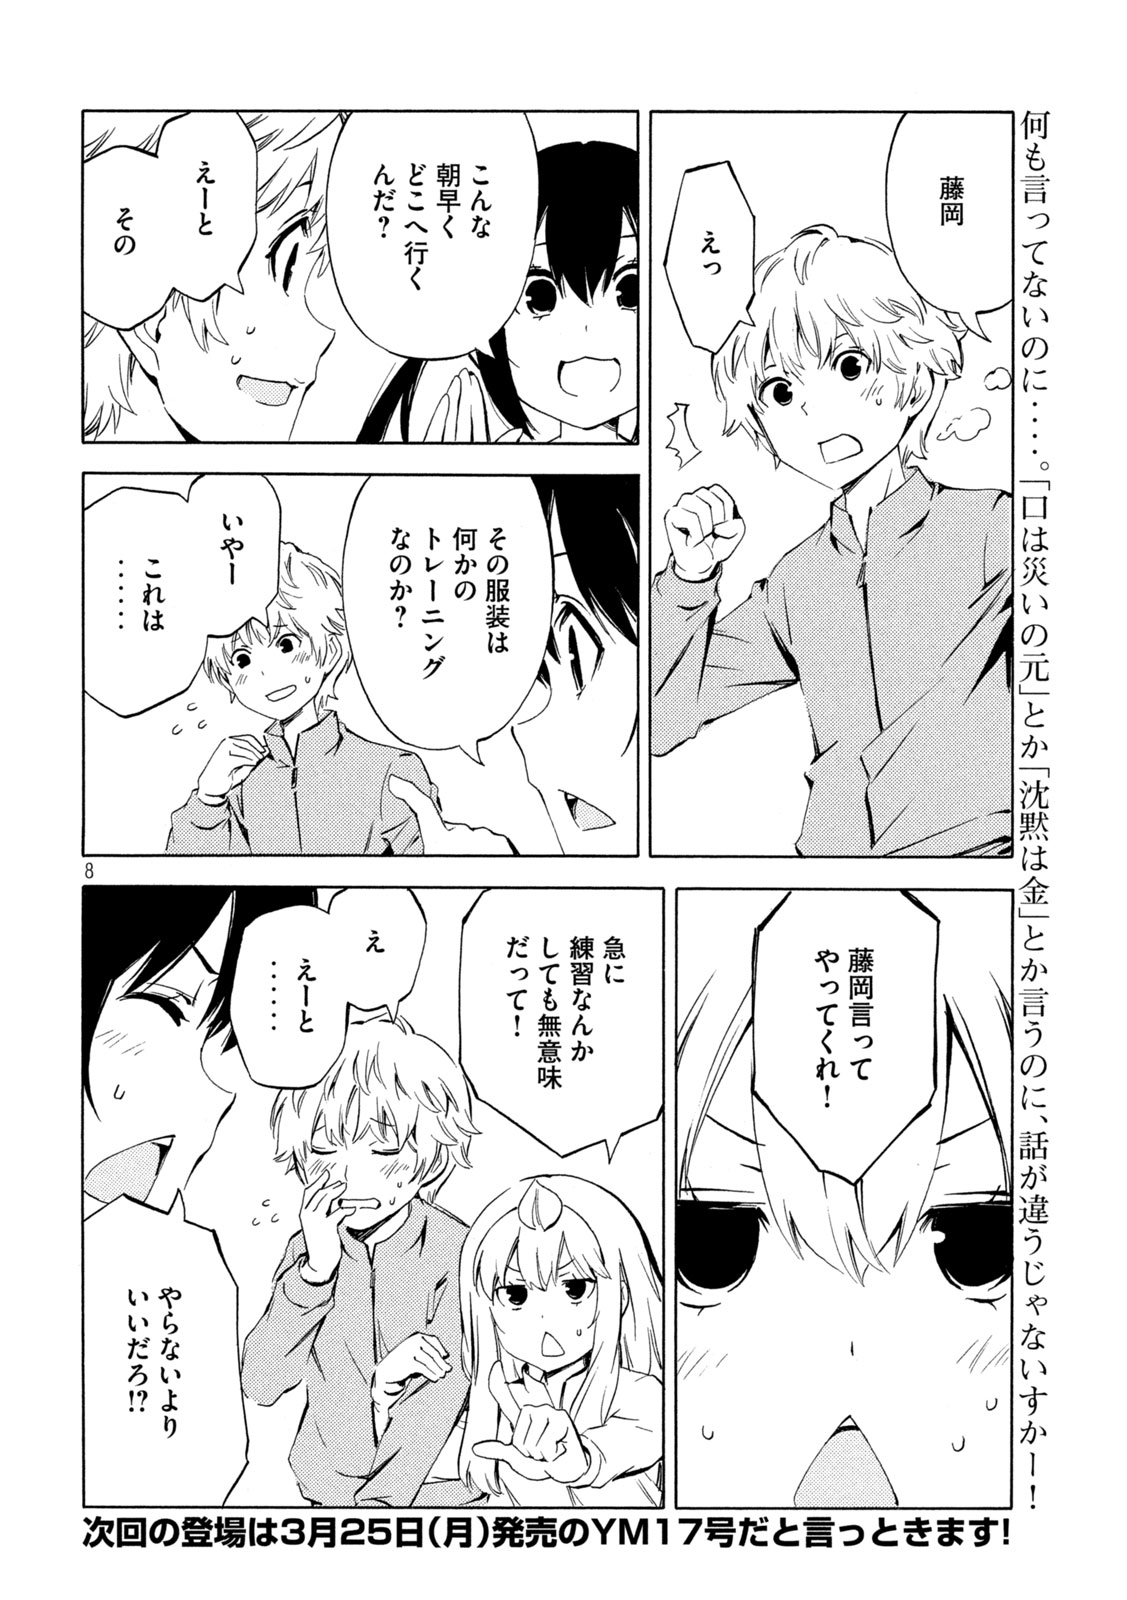 Minami-ke - Chapter 480 - Page 8